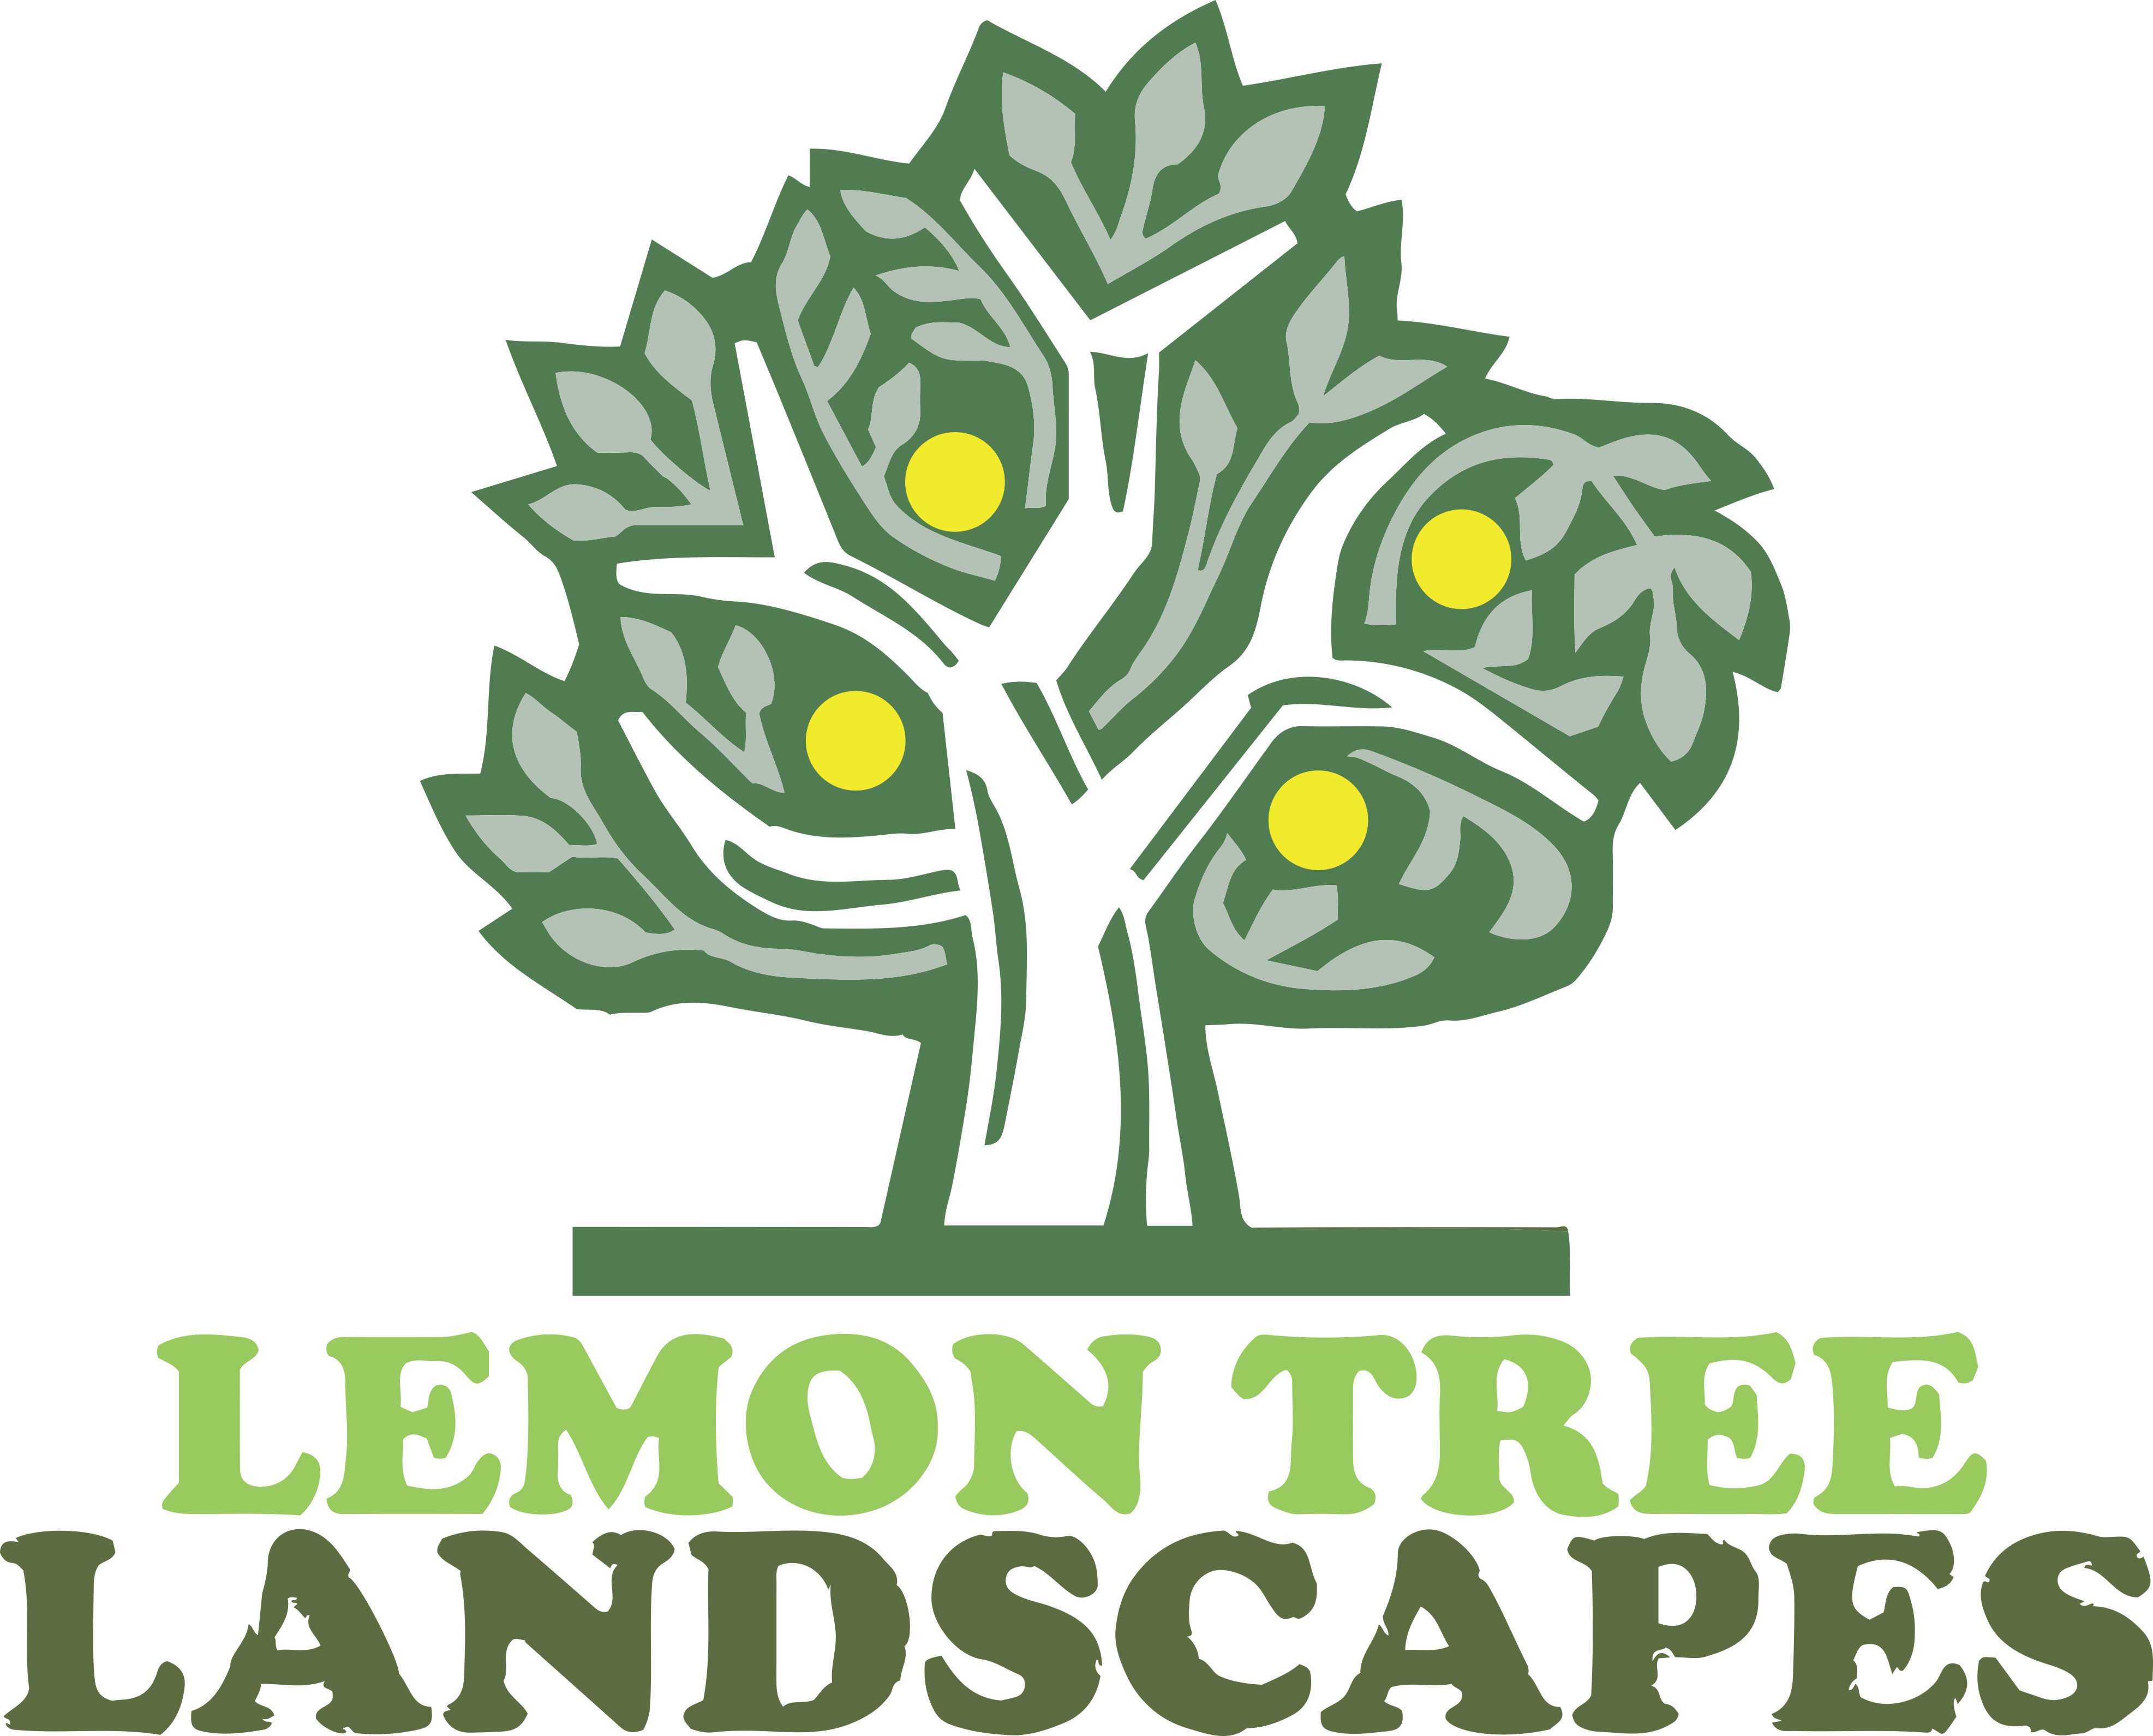 Lemon Tree Landscapes's logo